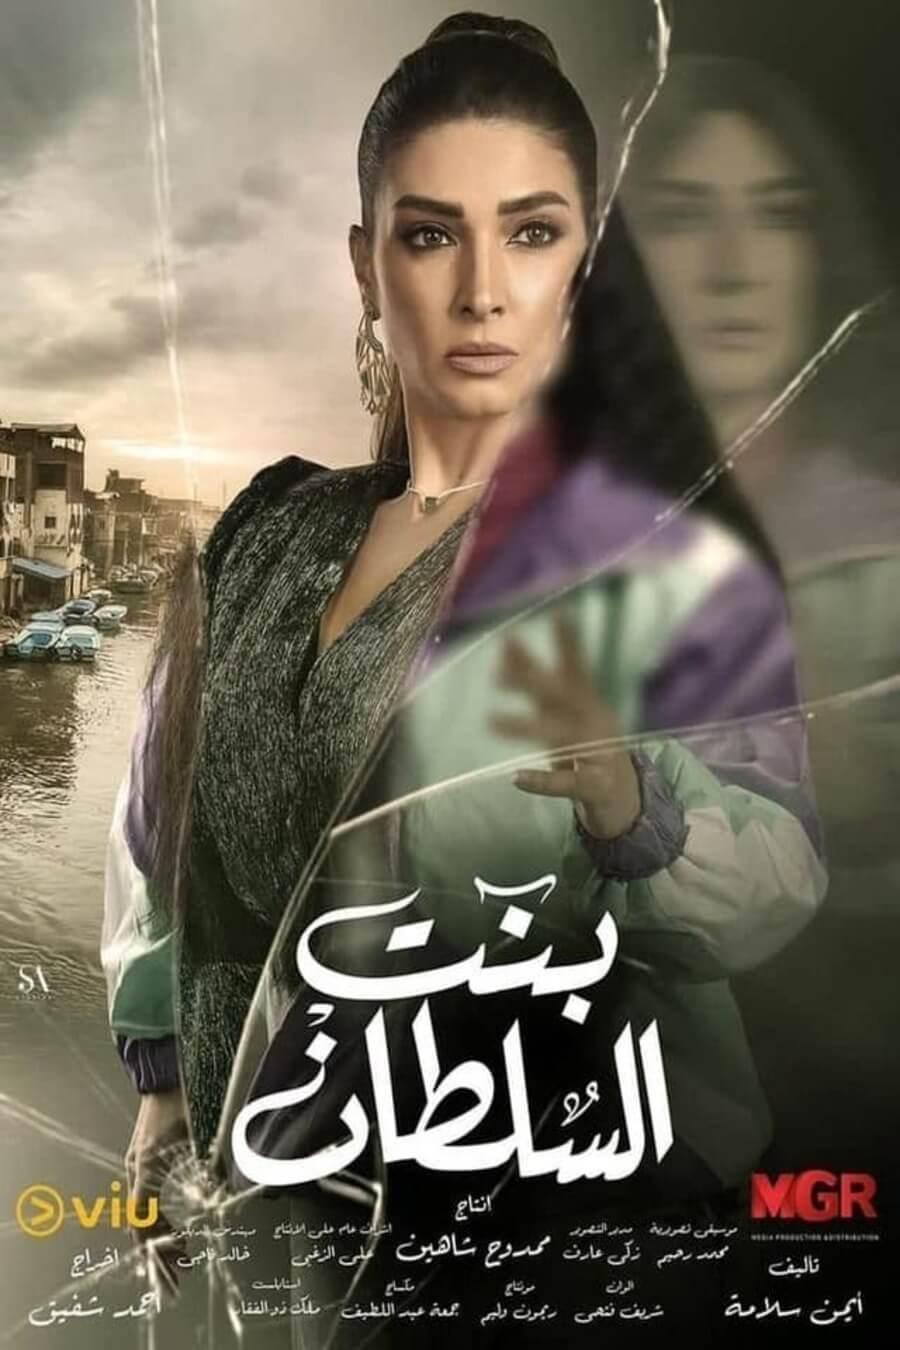 TV ratings for Bint El Sultan (بنت السلطان) in the United States. viu TV series